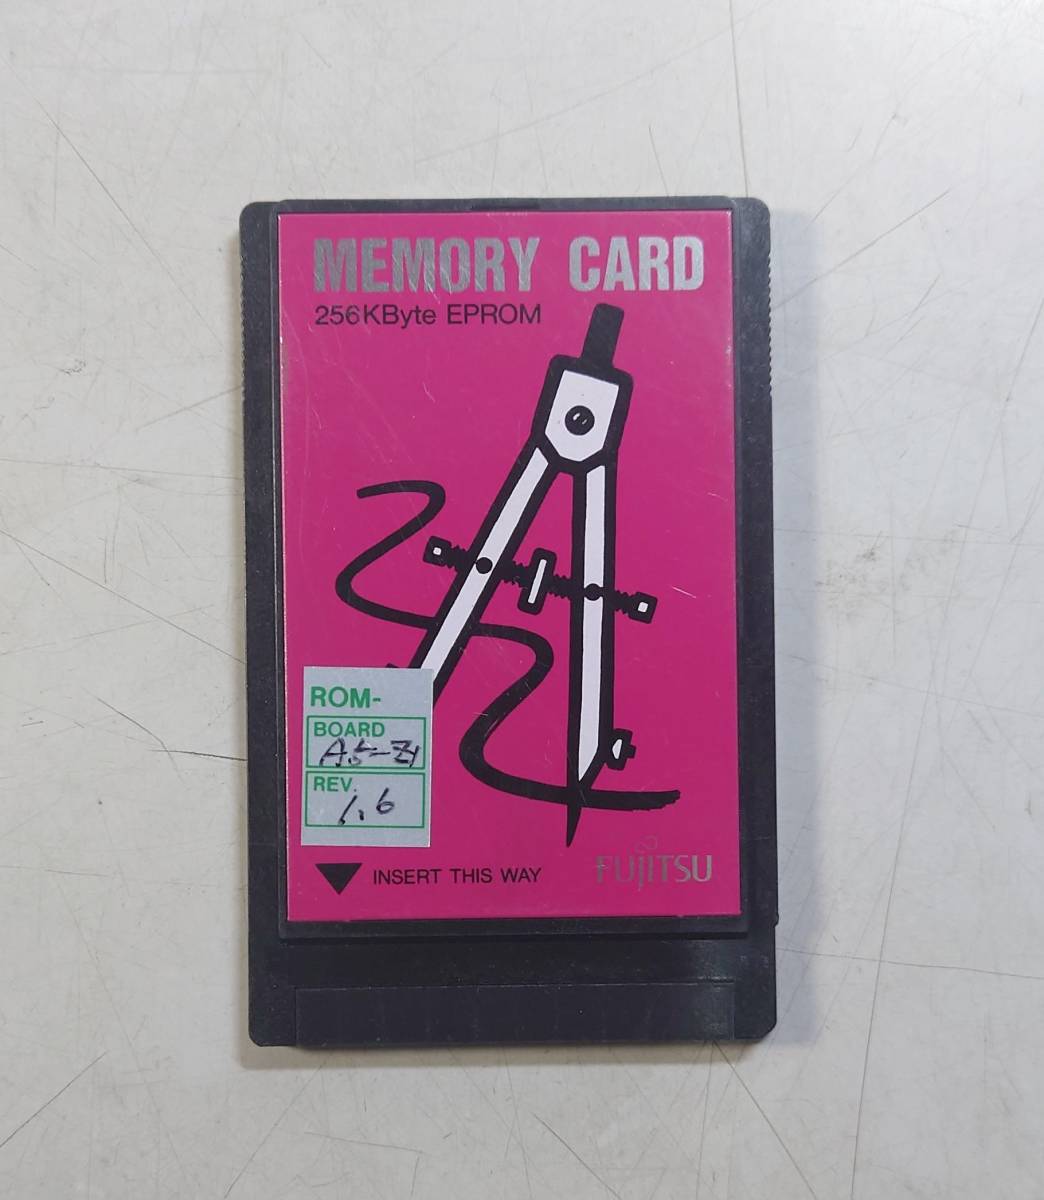 KN4446 [ утиль ] FUJITSU MEMORY CARD 256Kbyte EPROM